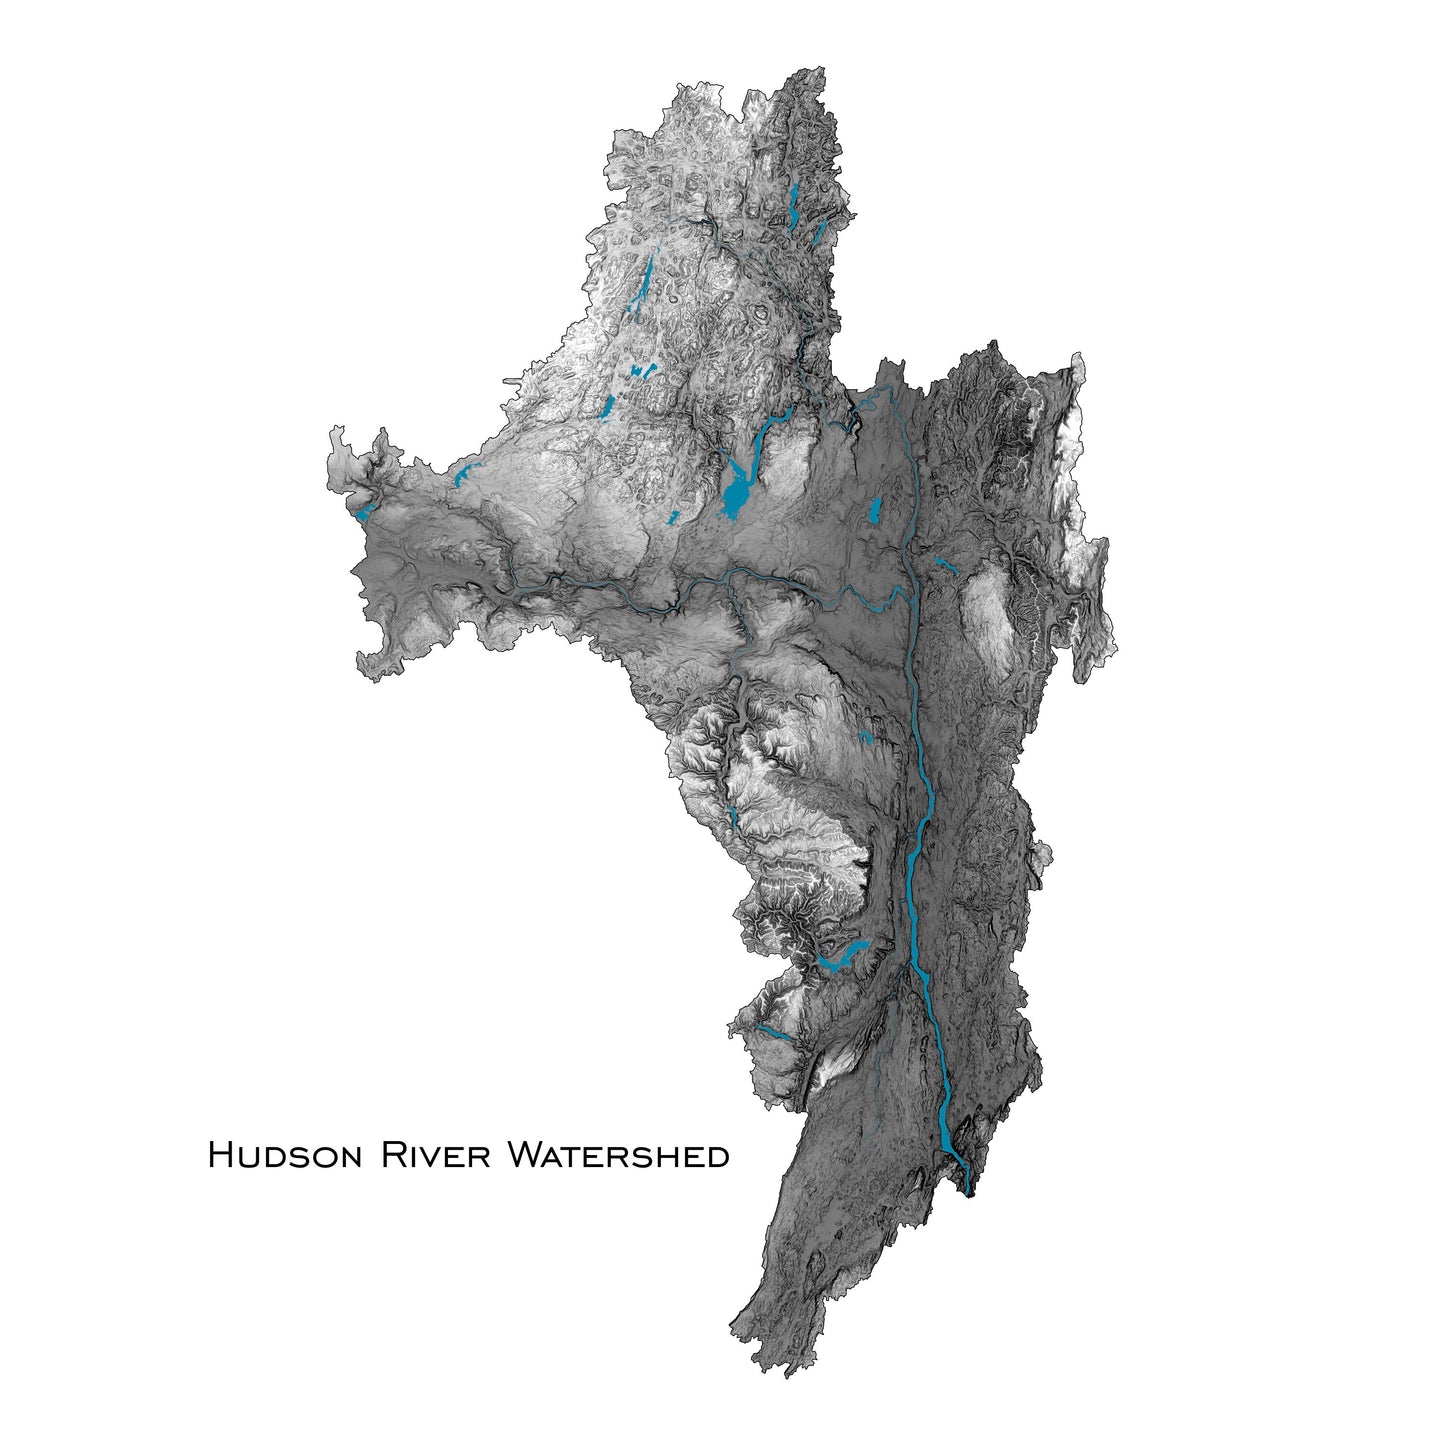 Hudson River Watershed